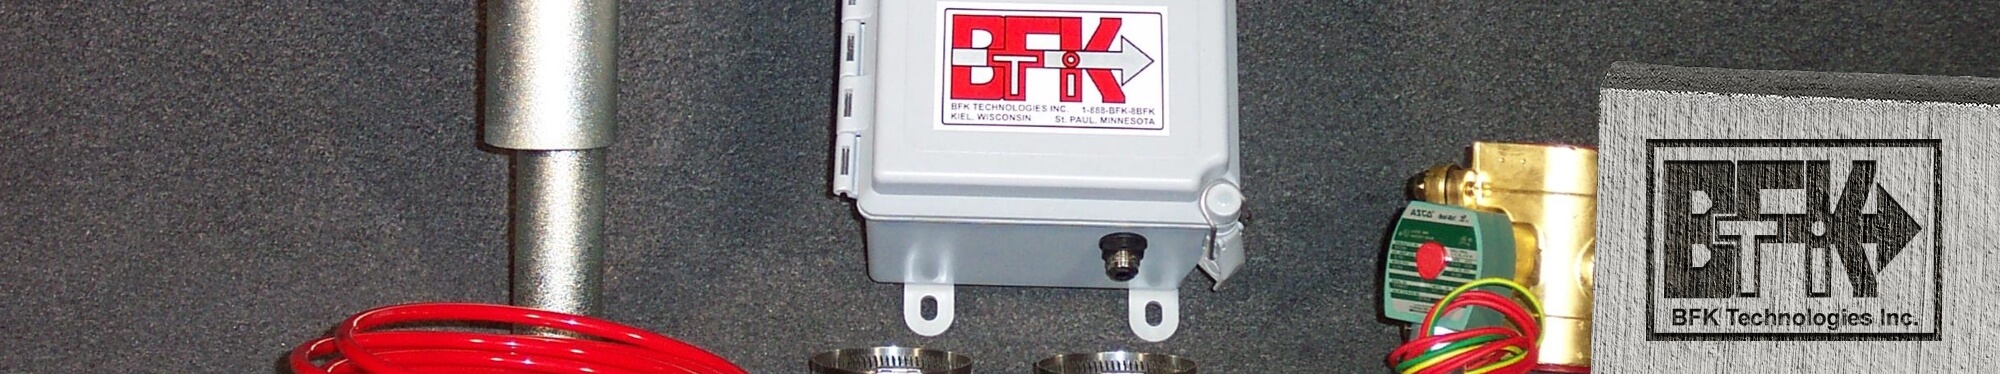 BFK Technologies Concrete Reclaimers Equipment